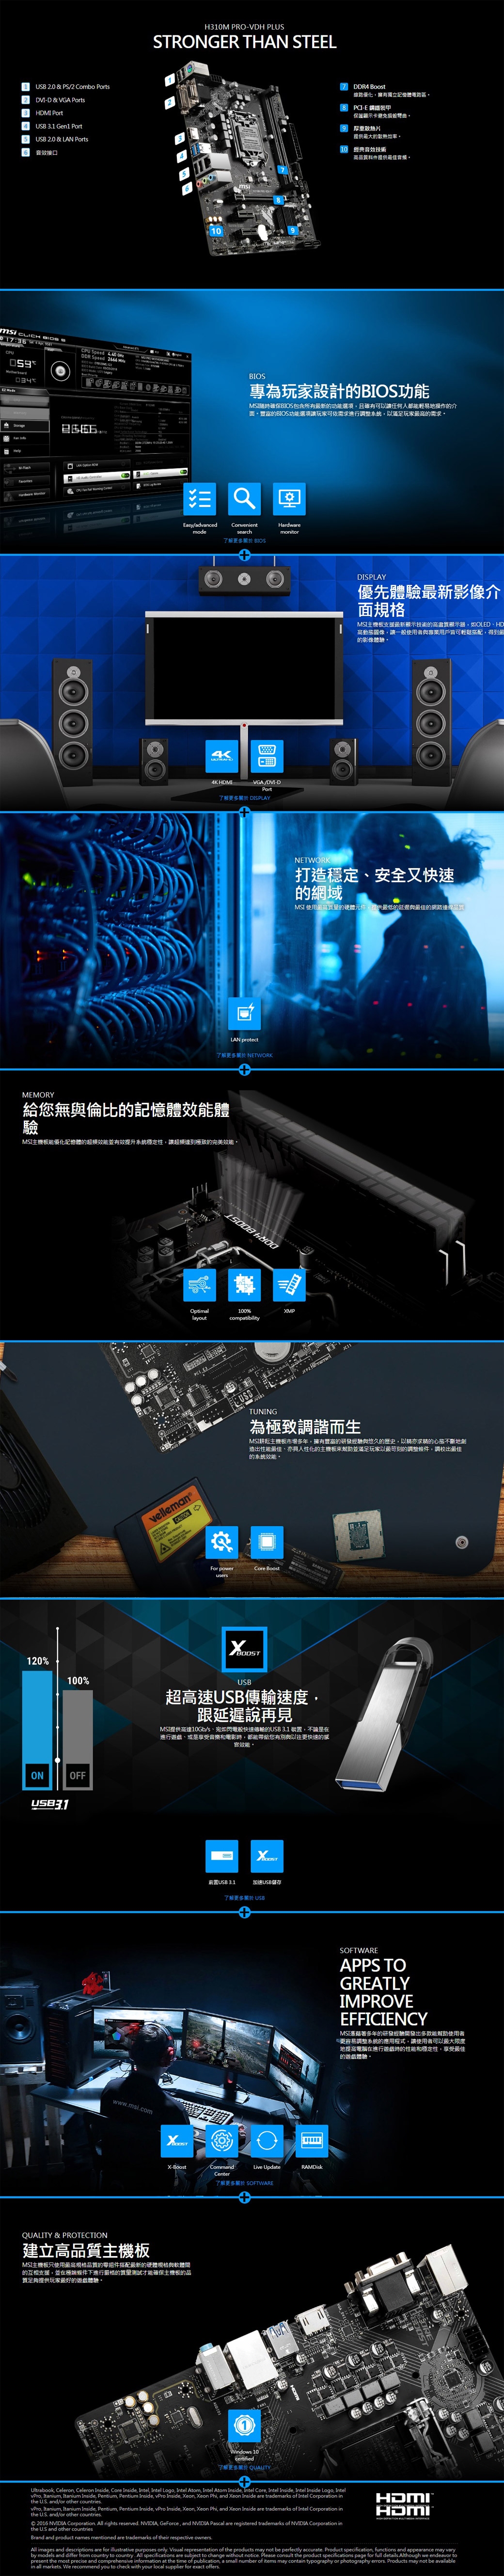 Intel i7-9700F + MSI H310M PRO-VDH PLUS 組合套餐